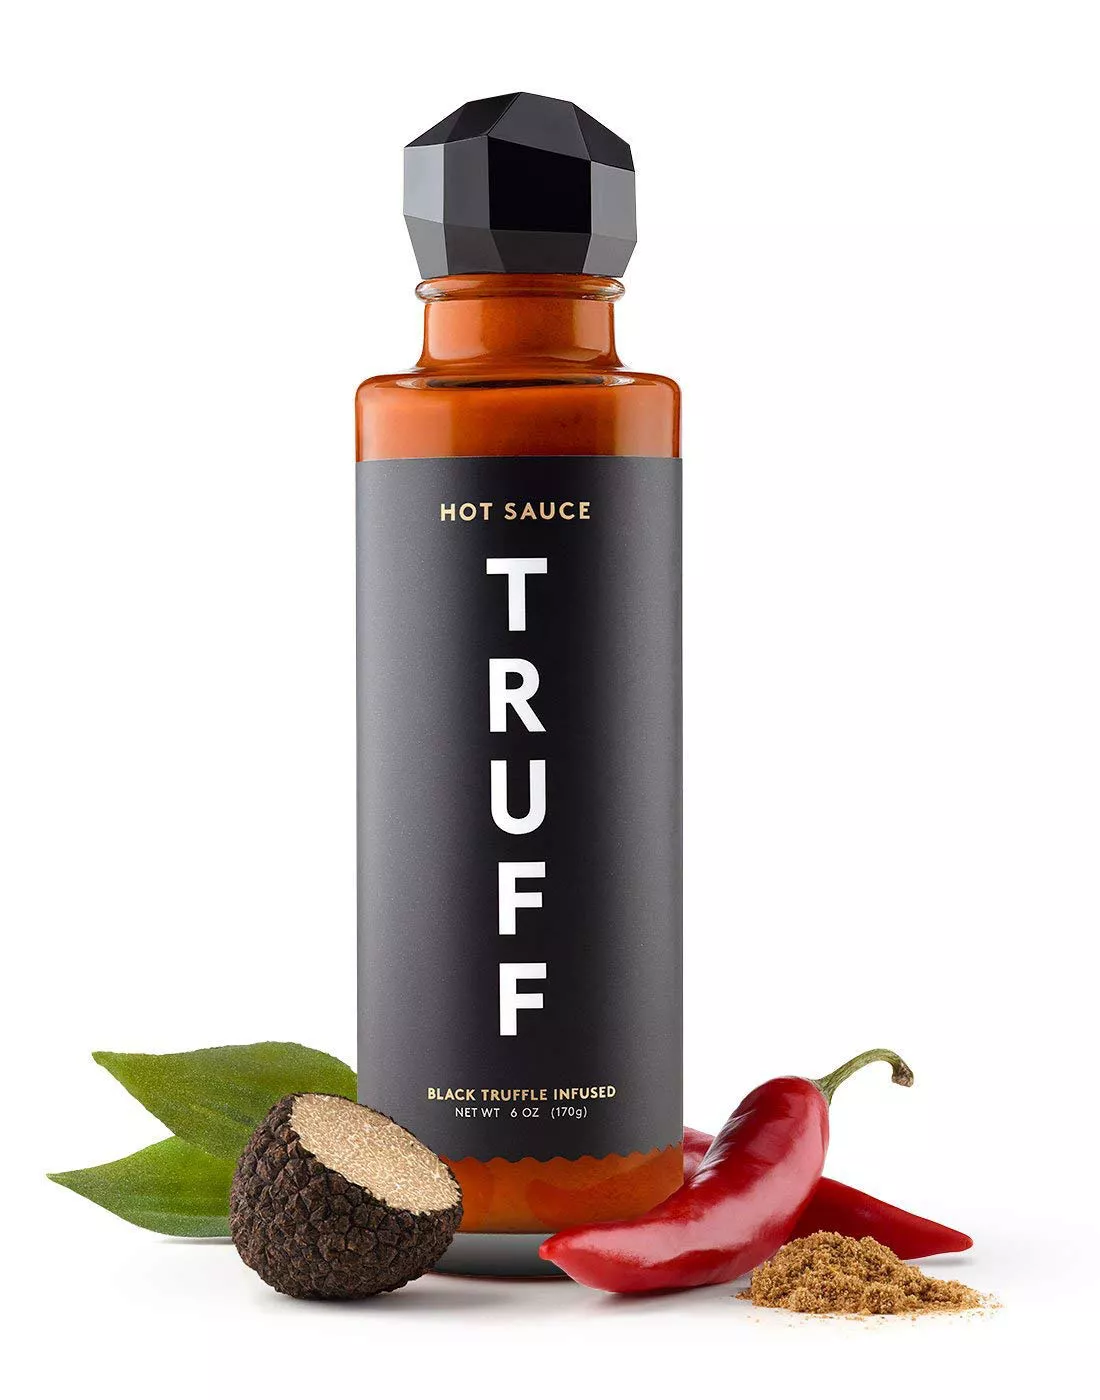 TRUFF Truffle-Infused Hot Sauce